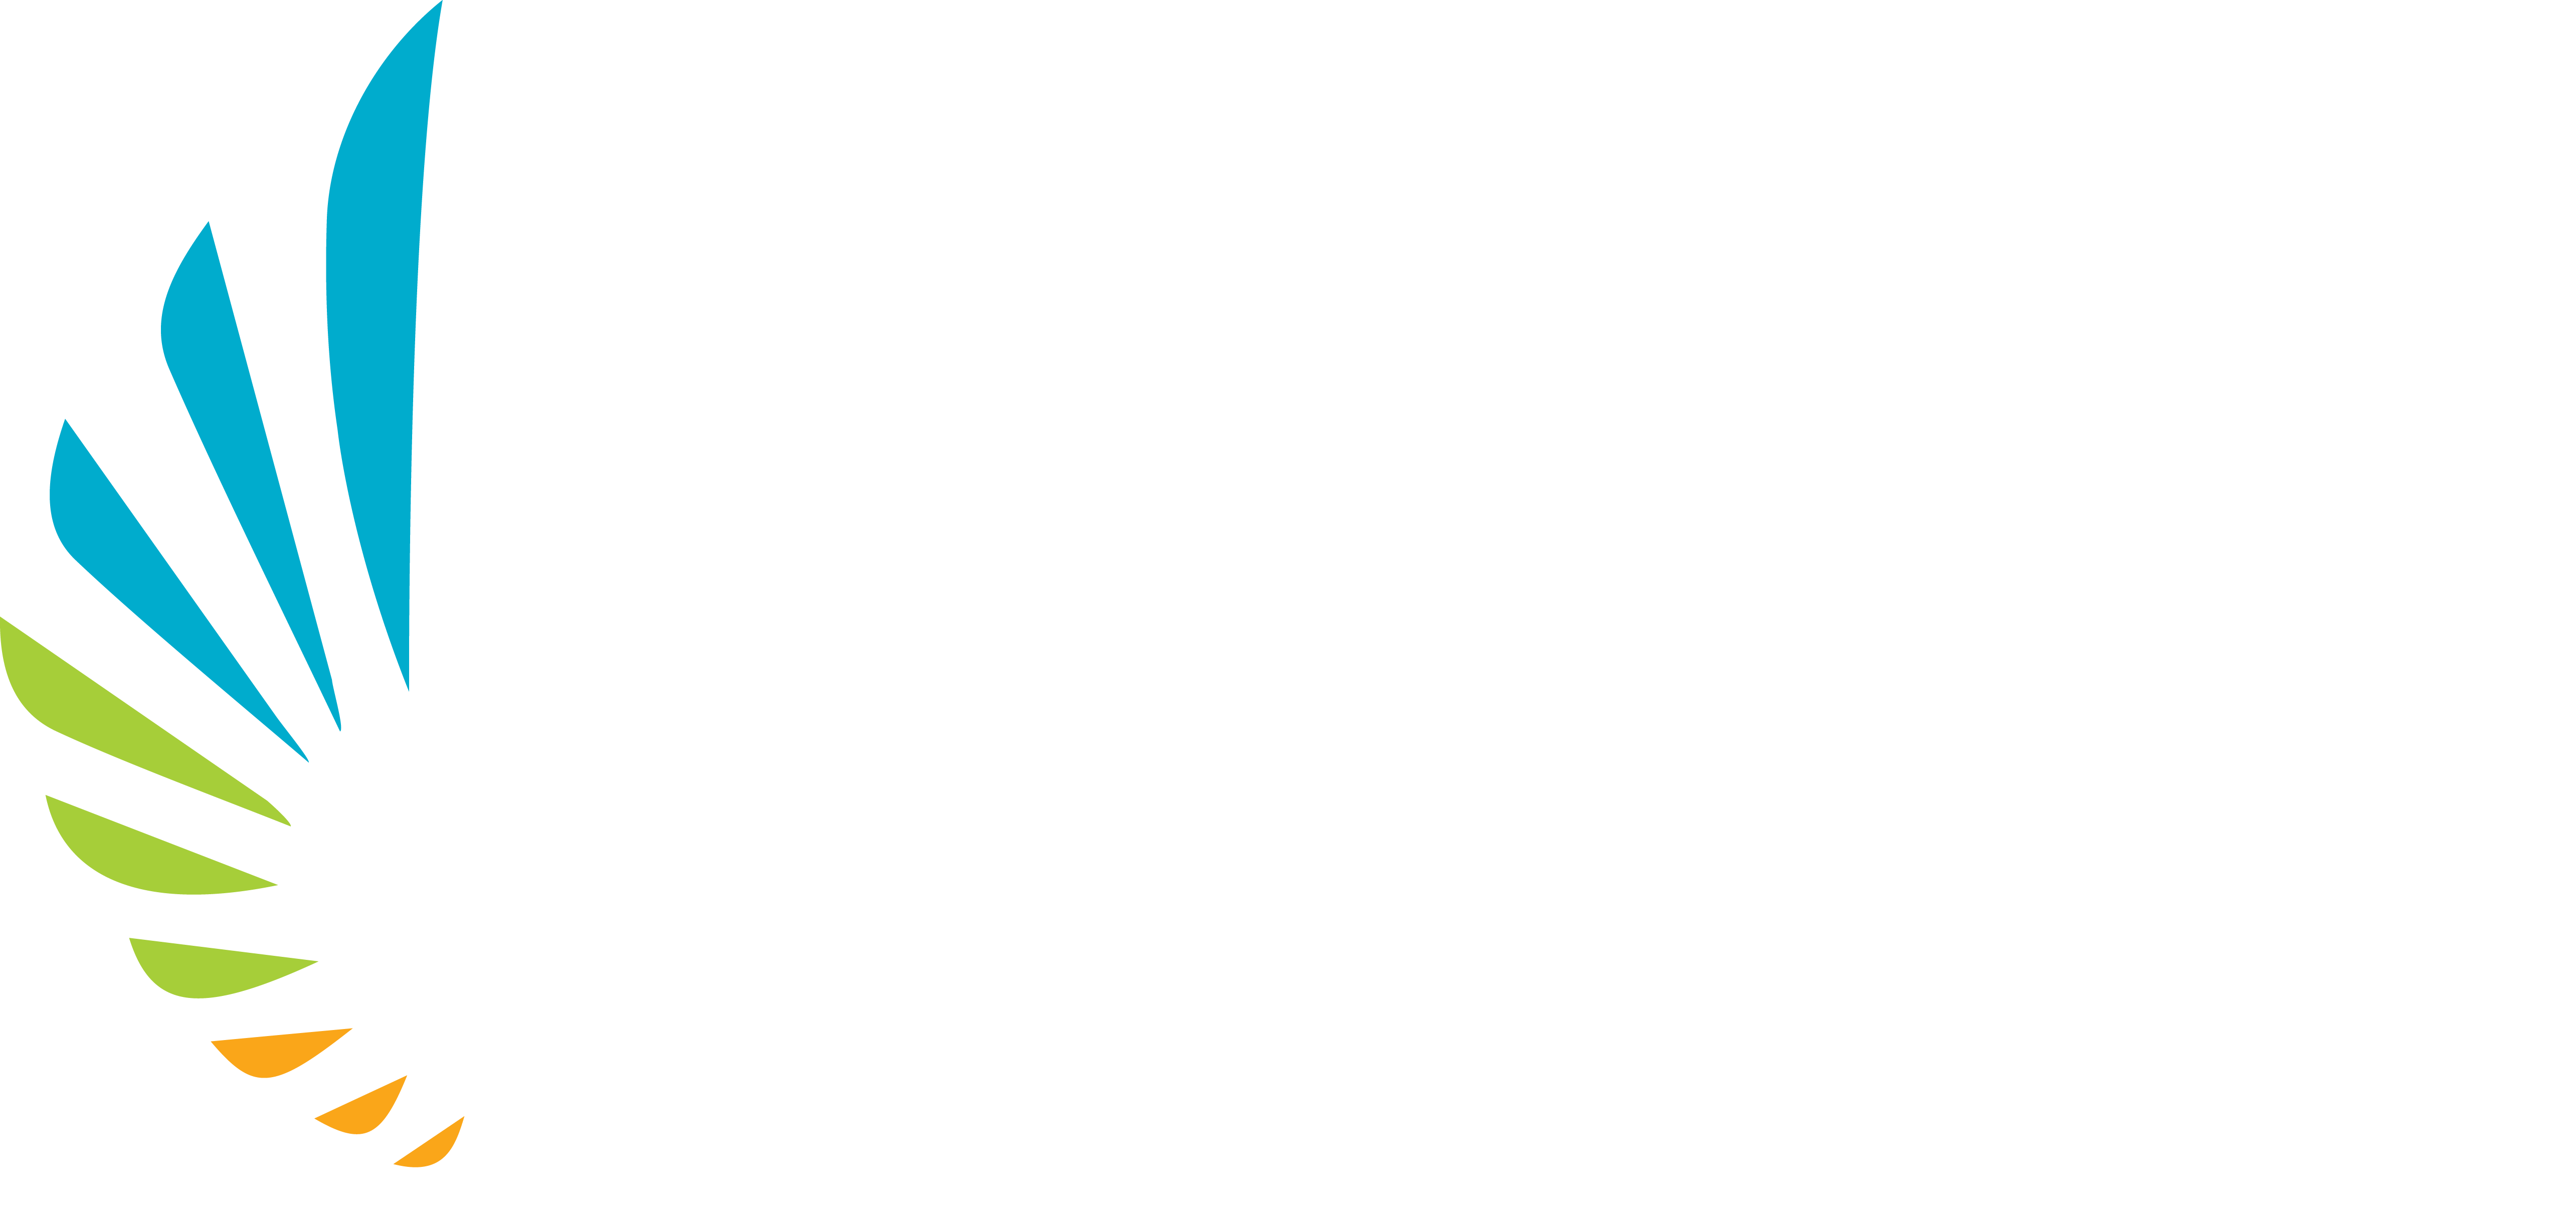 Tac2020